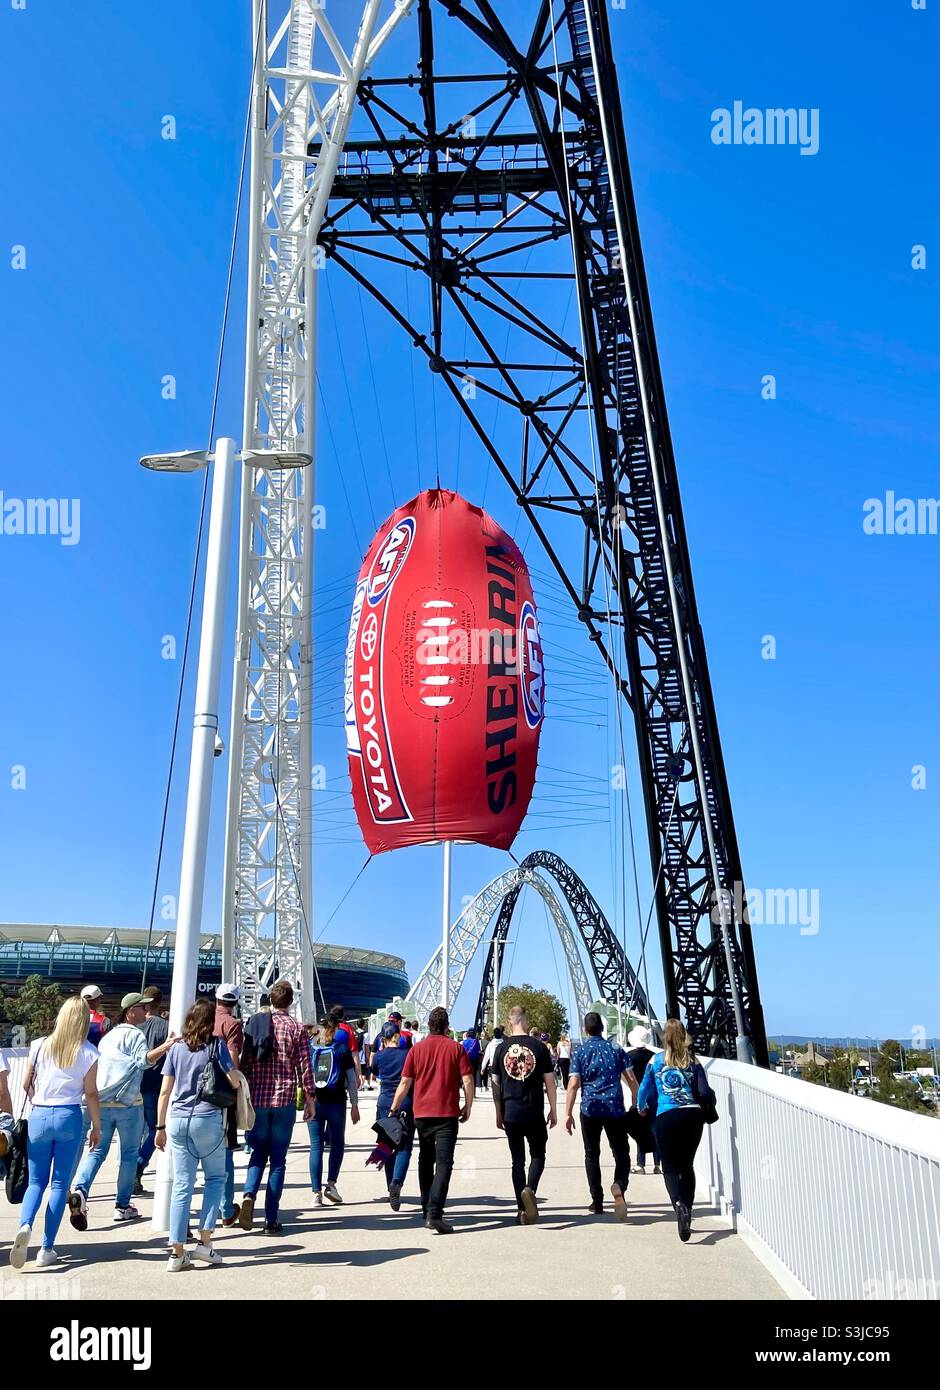 2021 AFL Grand Final at Optus Stadium, pregame crowd crossing Matagarup Bridge walking under Sherrin football balloon, Perth Western Australia. Stock Photo